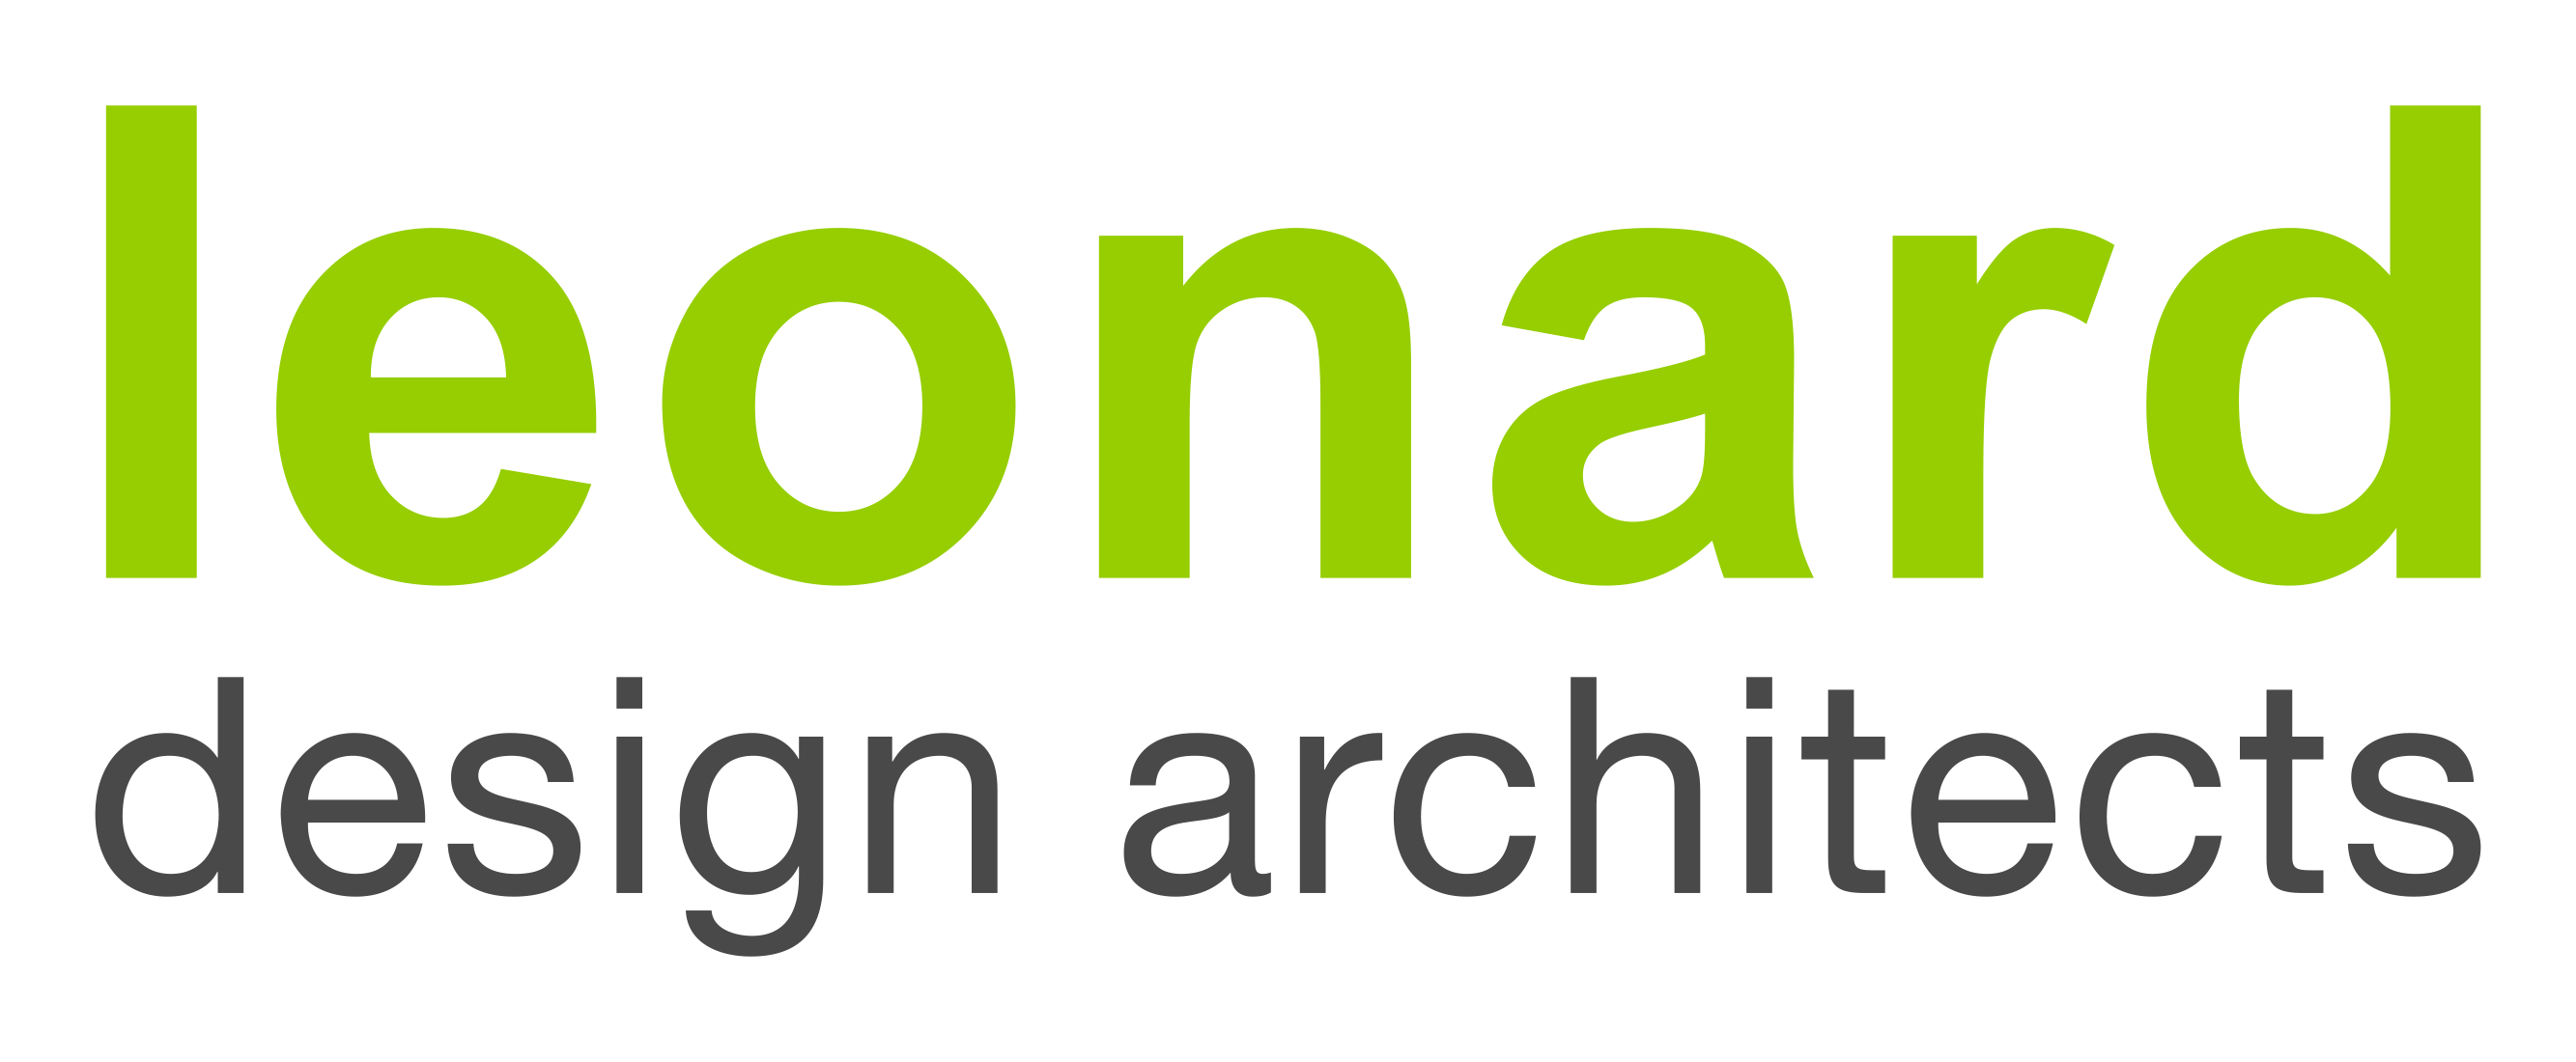 Architects Logo - Leonard Design Architects - Home